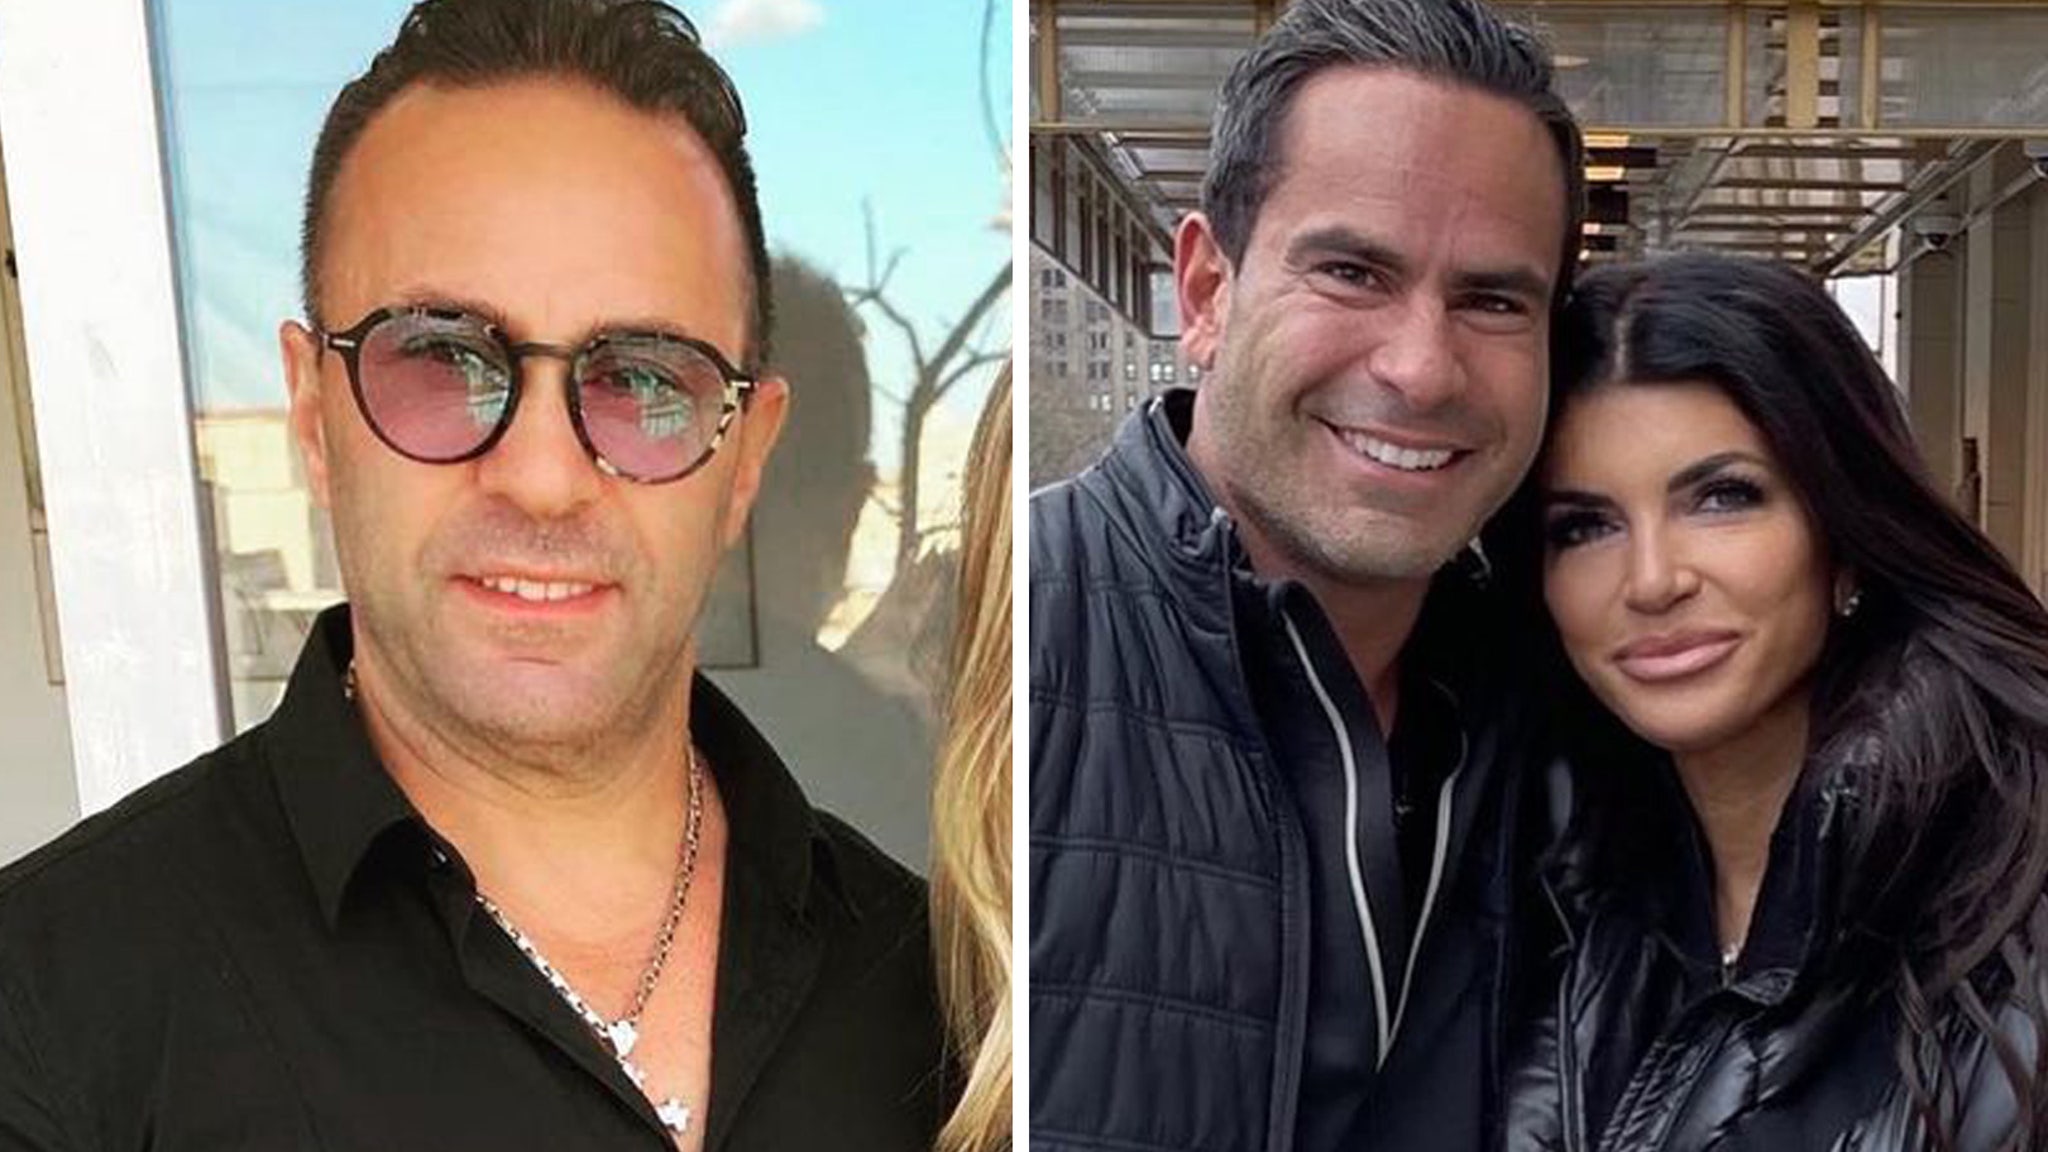 Joe Giudice on meeting ex-wife Teresa Giudice’s boyfriend, Luis ‘Louie’ Ruelas